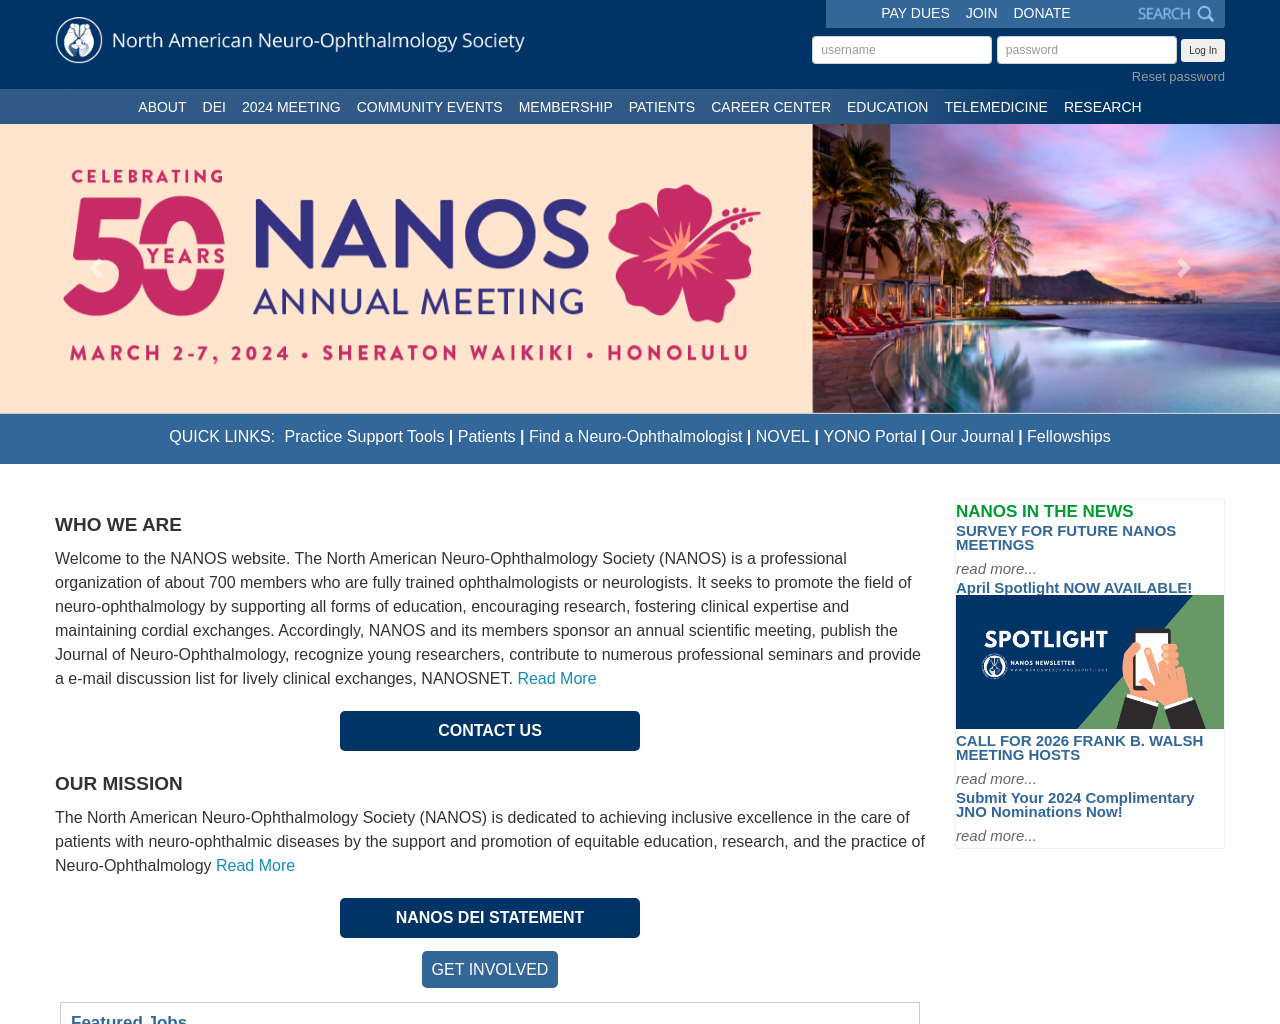 nanosweb.org